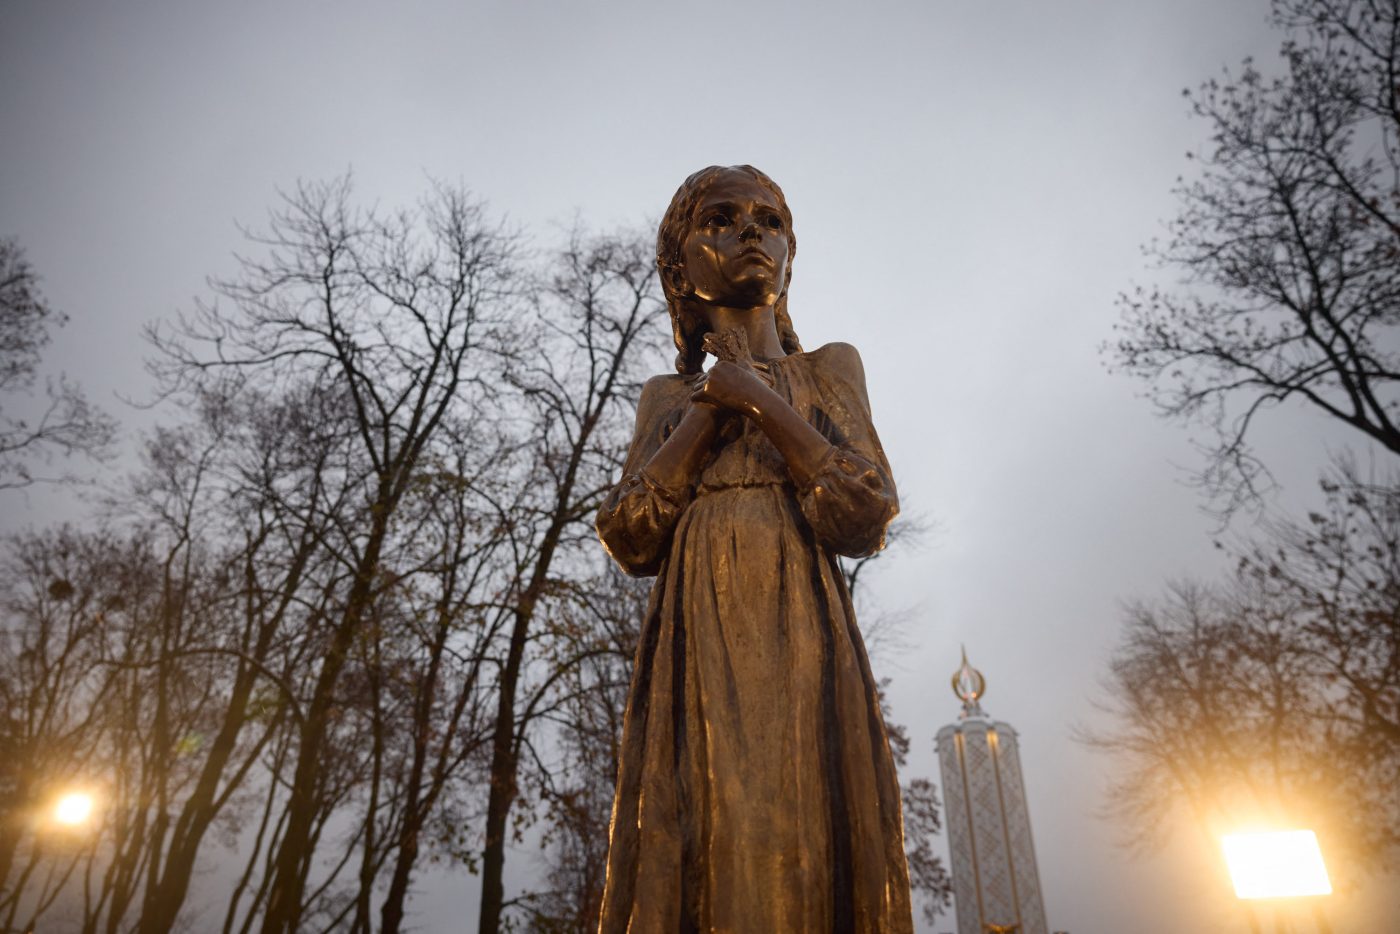 Photo: Bitter Memory of Childhood statue in honor of the 90th anniversary of the Holodomor famine, November 26, 2022 in Kyiv, Ukraine. Credit: Ukrainian Presidency via ABACAPRESS.COM